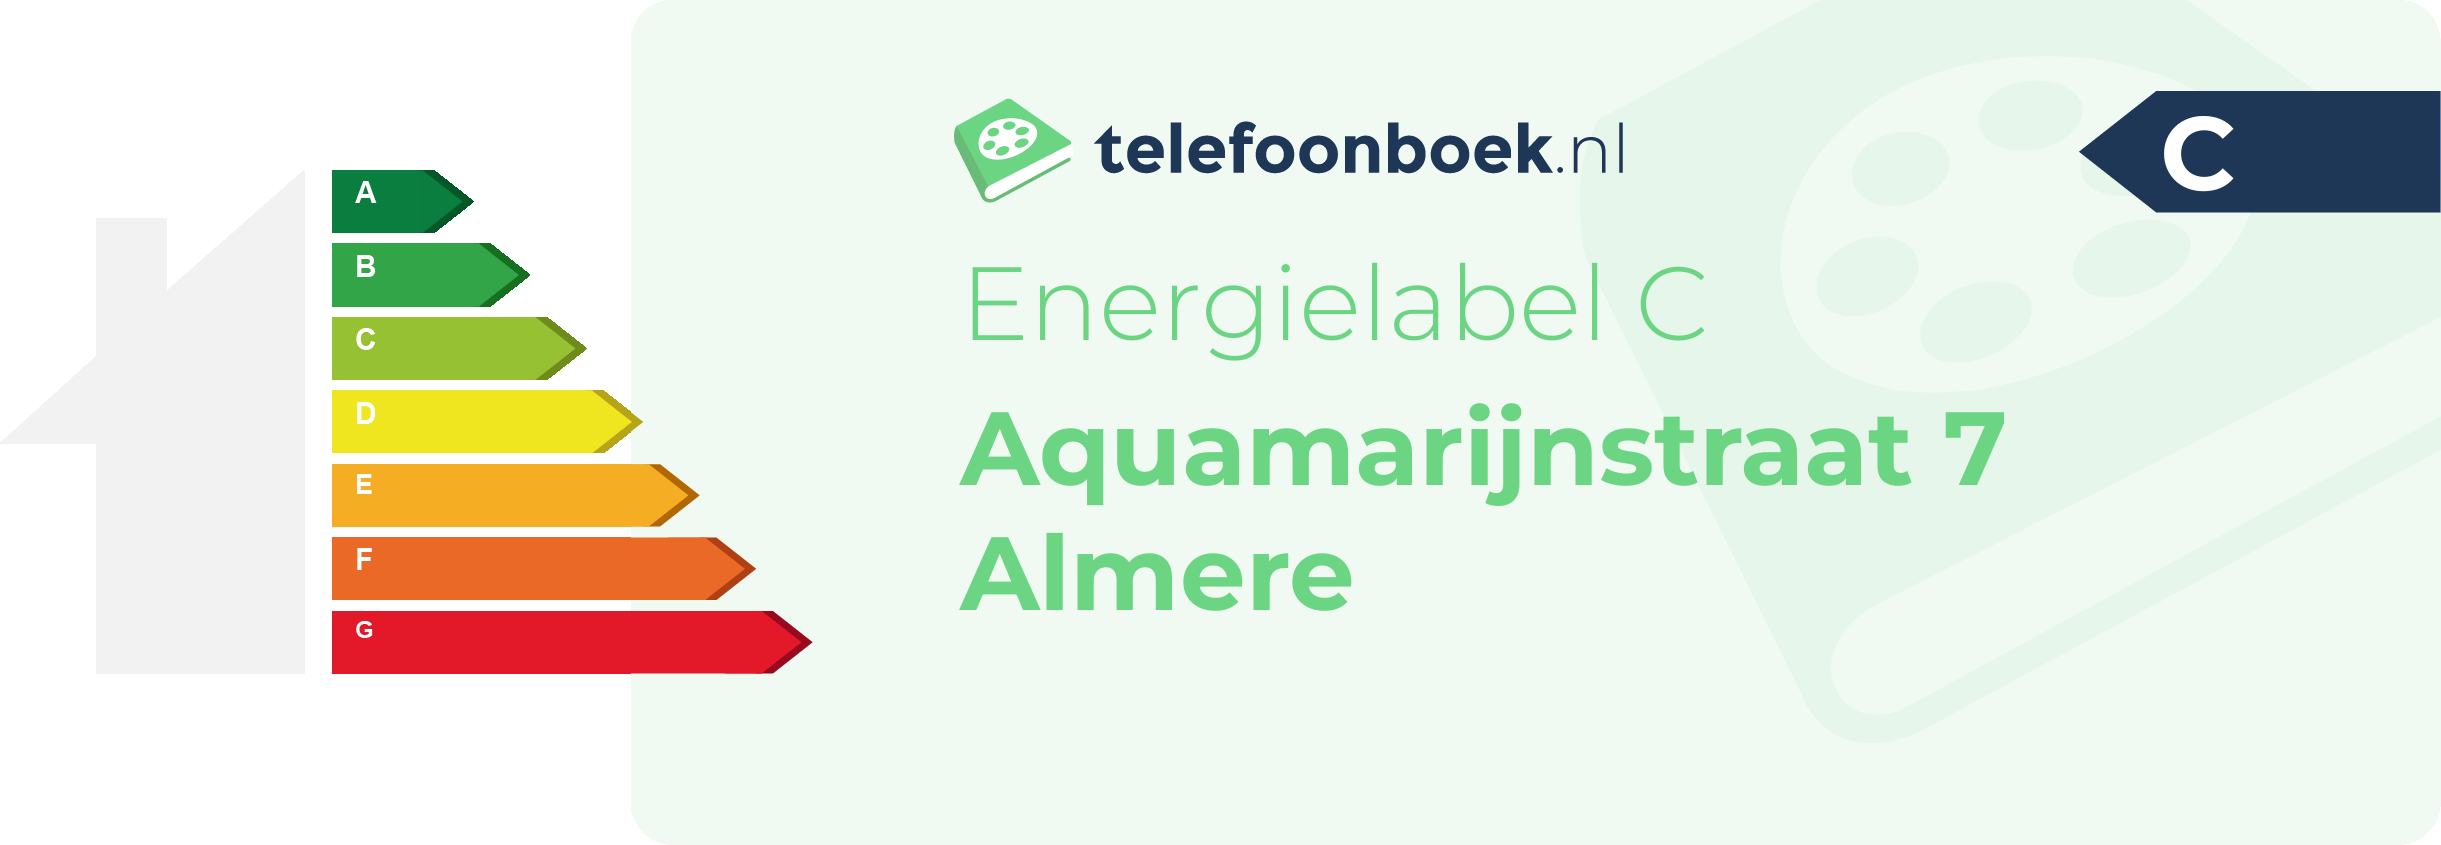 Energielabel Aquamarijnstraat 7 Almere